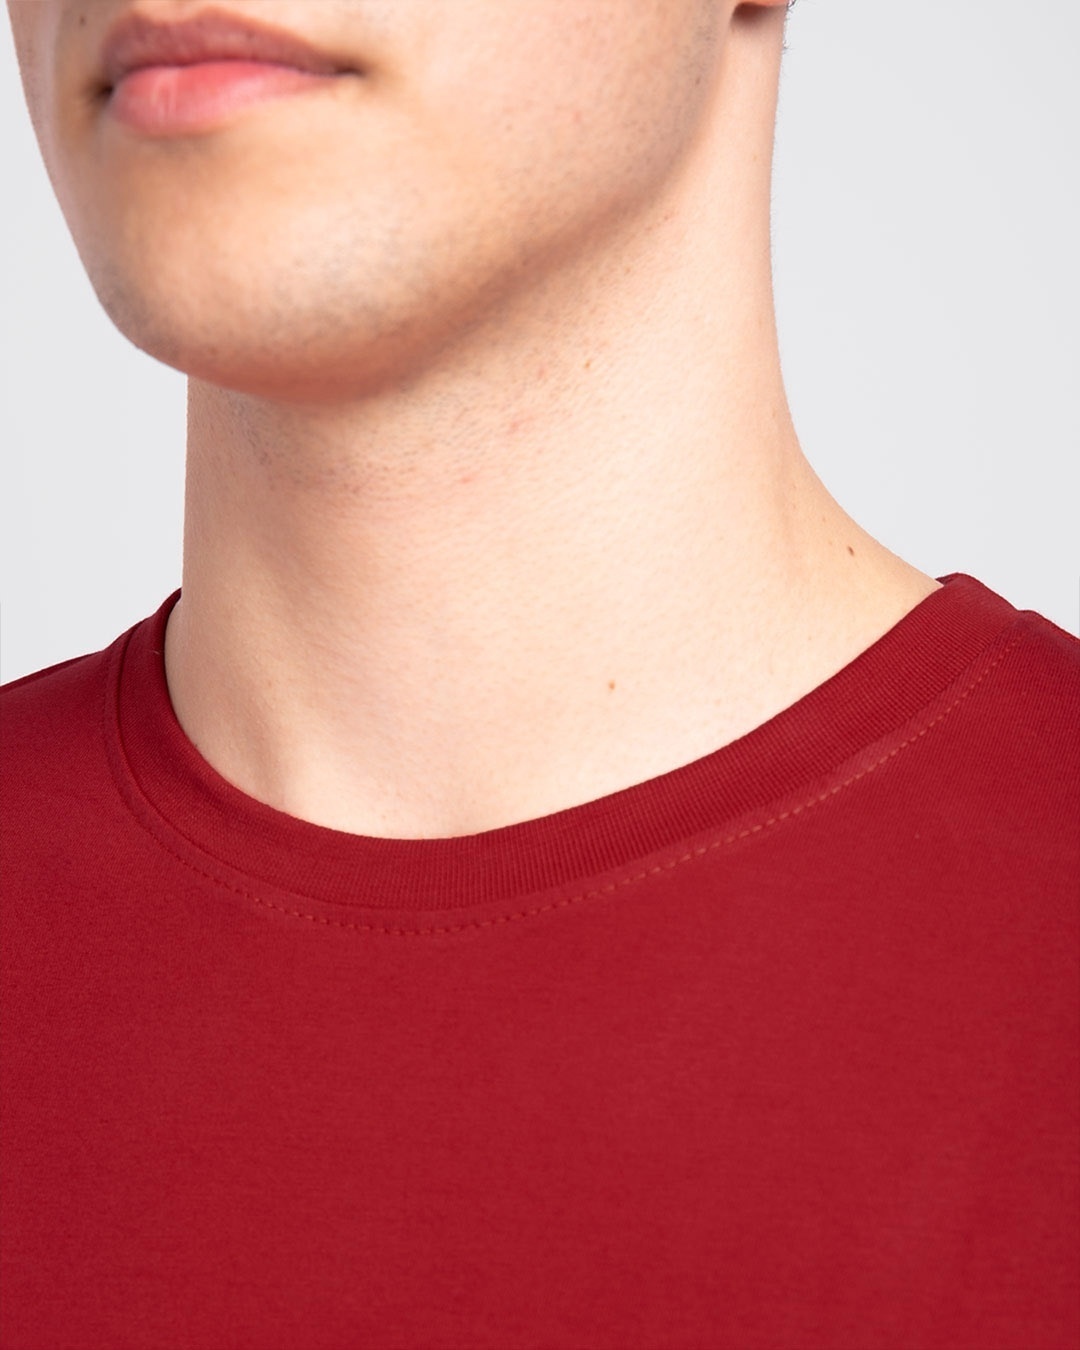 Shop Men's Plain Half Sleeve T-Shirt Pack of 3(Black, Bold Red & Neon Green)